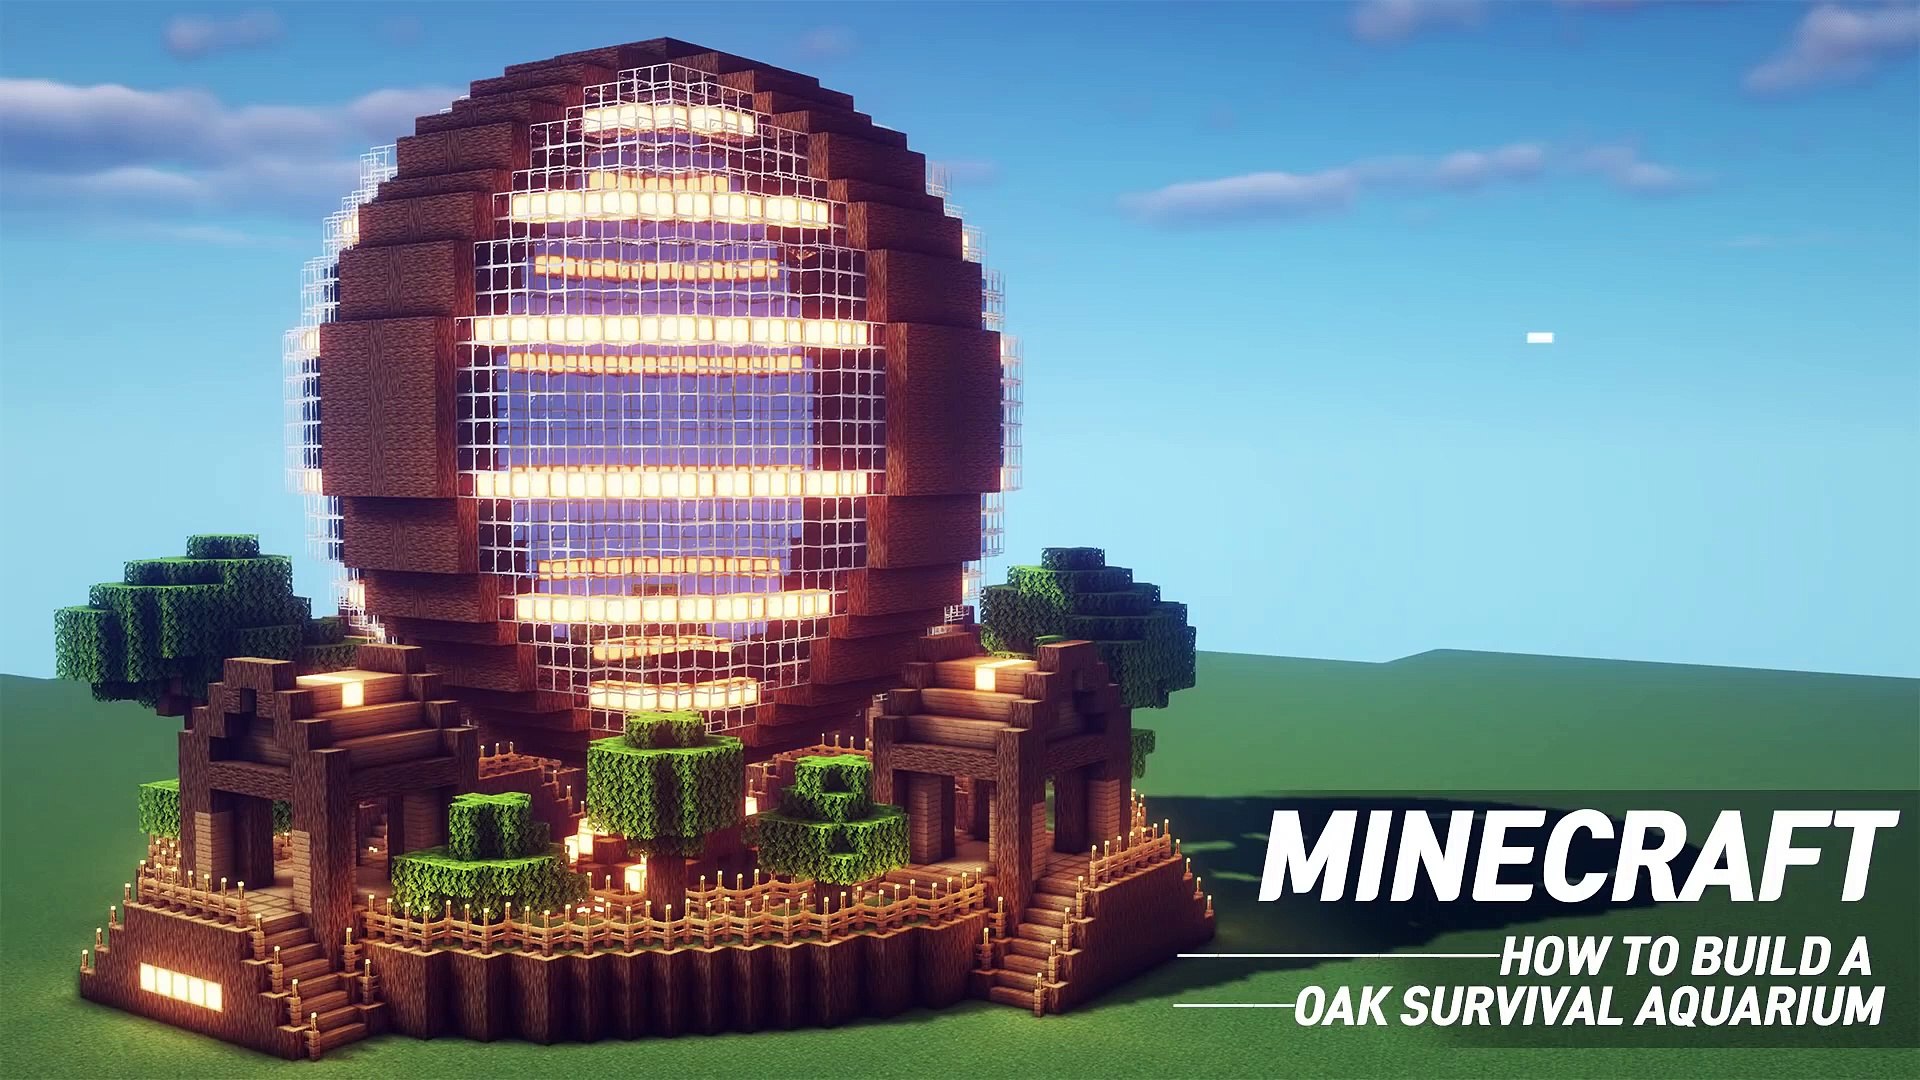 Minecraft Large Oak Survival Aquarium Tutorial How To Build In Minecraft 59 Video Dailymotion